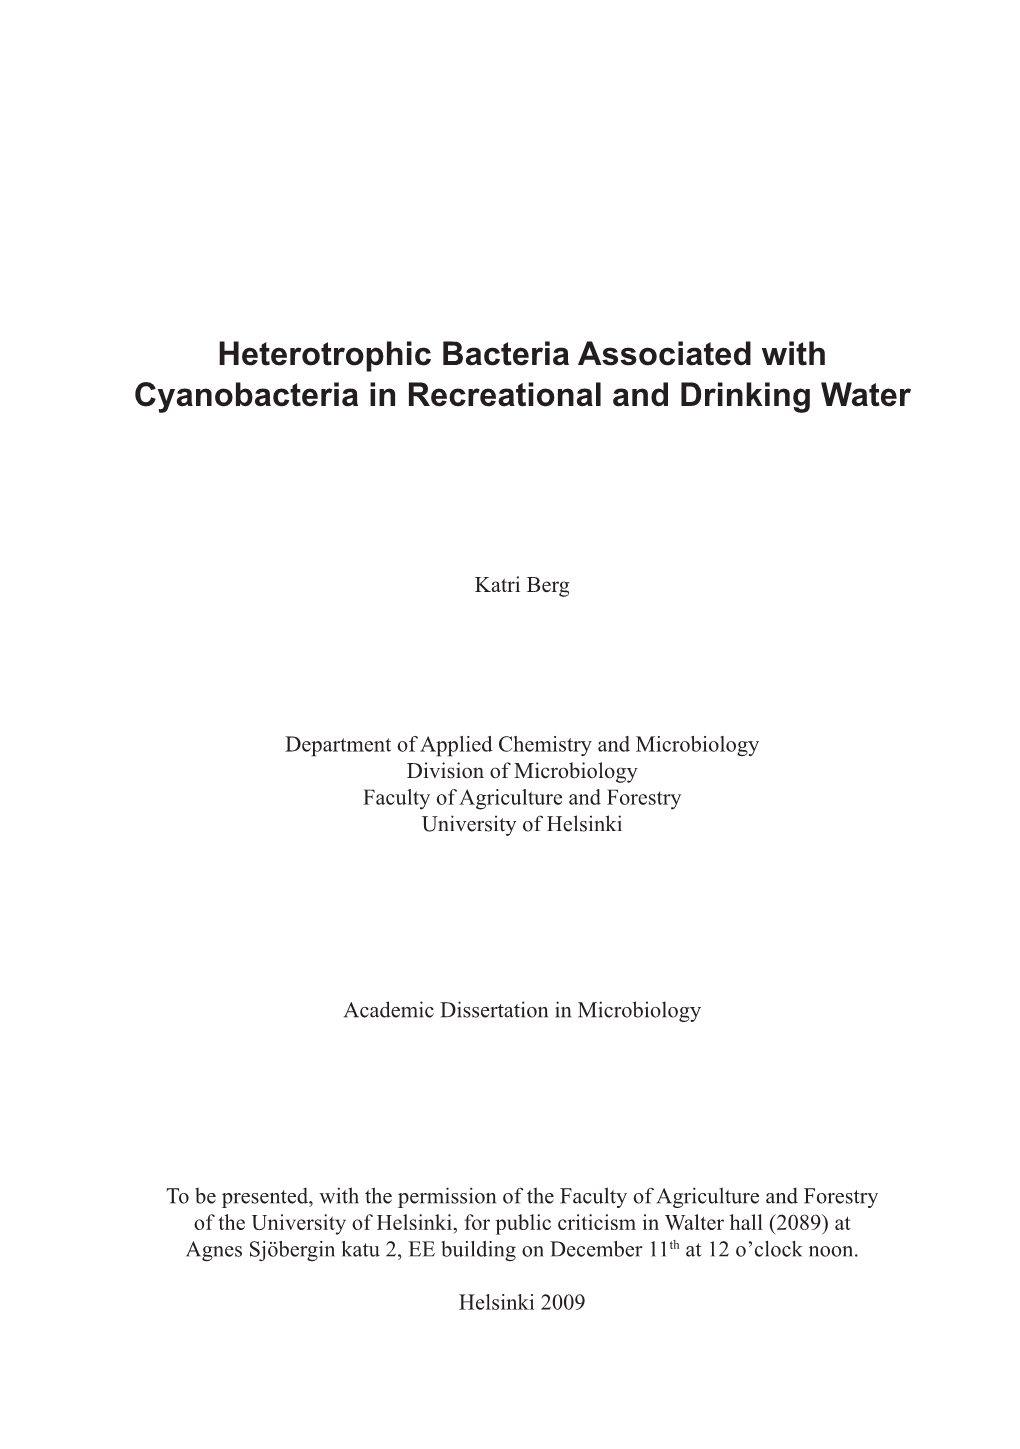 Heterotrophic Bacteria Associated with Cyanobacteria in Recreational and Drinking Water